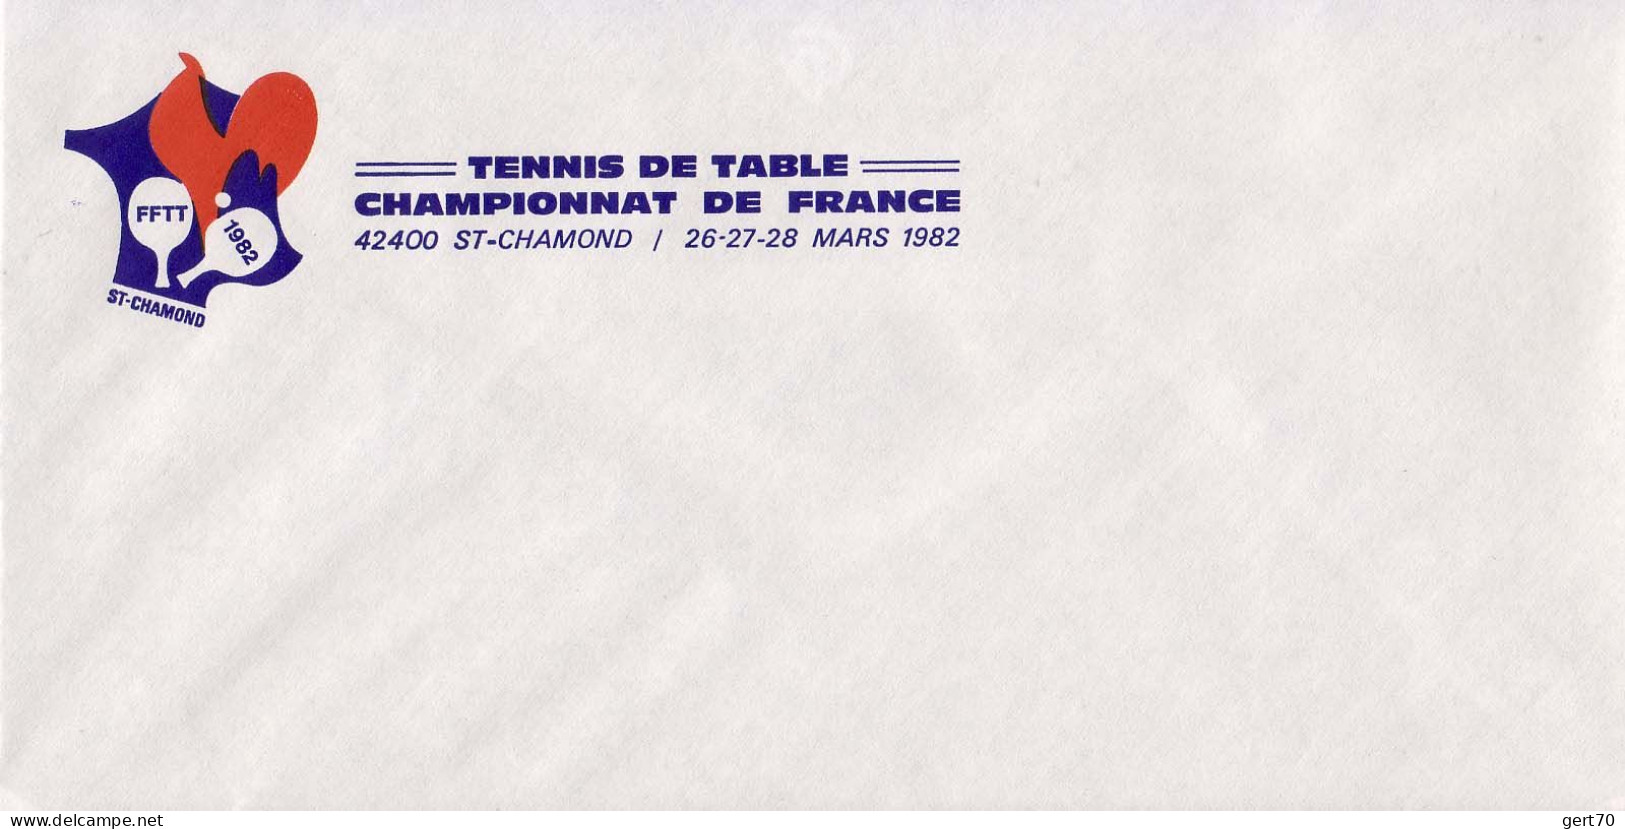 France 1982, Mint Cover / Enveloppe Vierge / French TT Championships, Saint-Chamond - Tischtennis